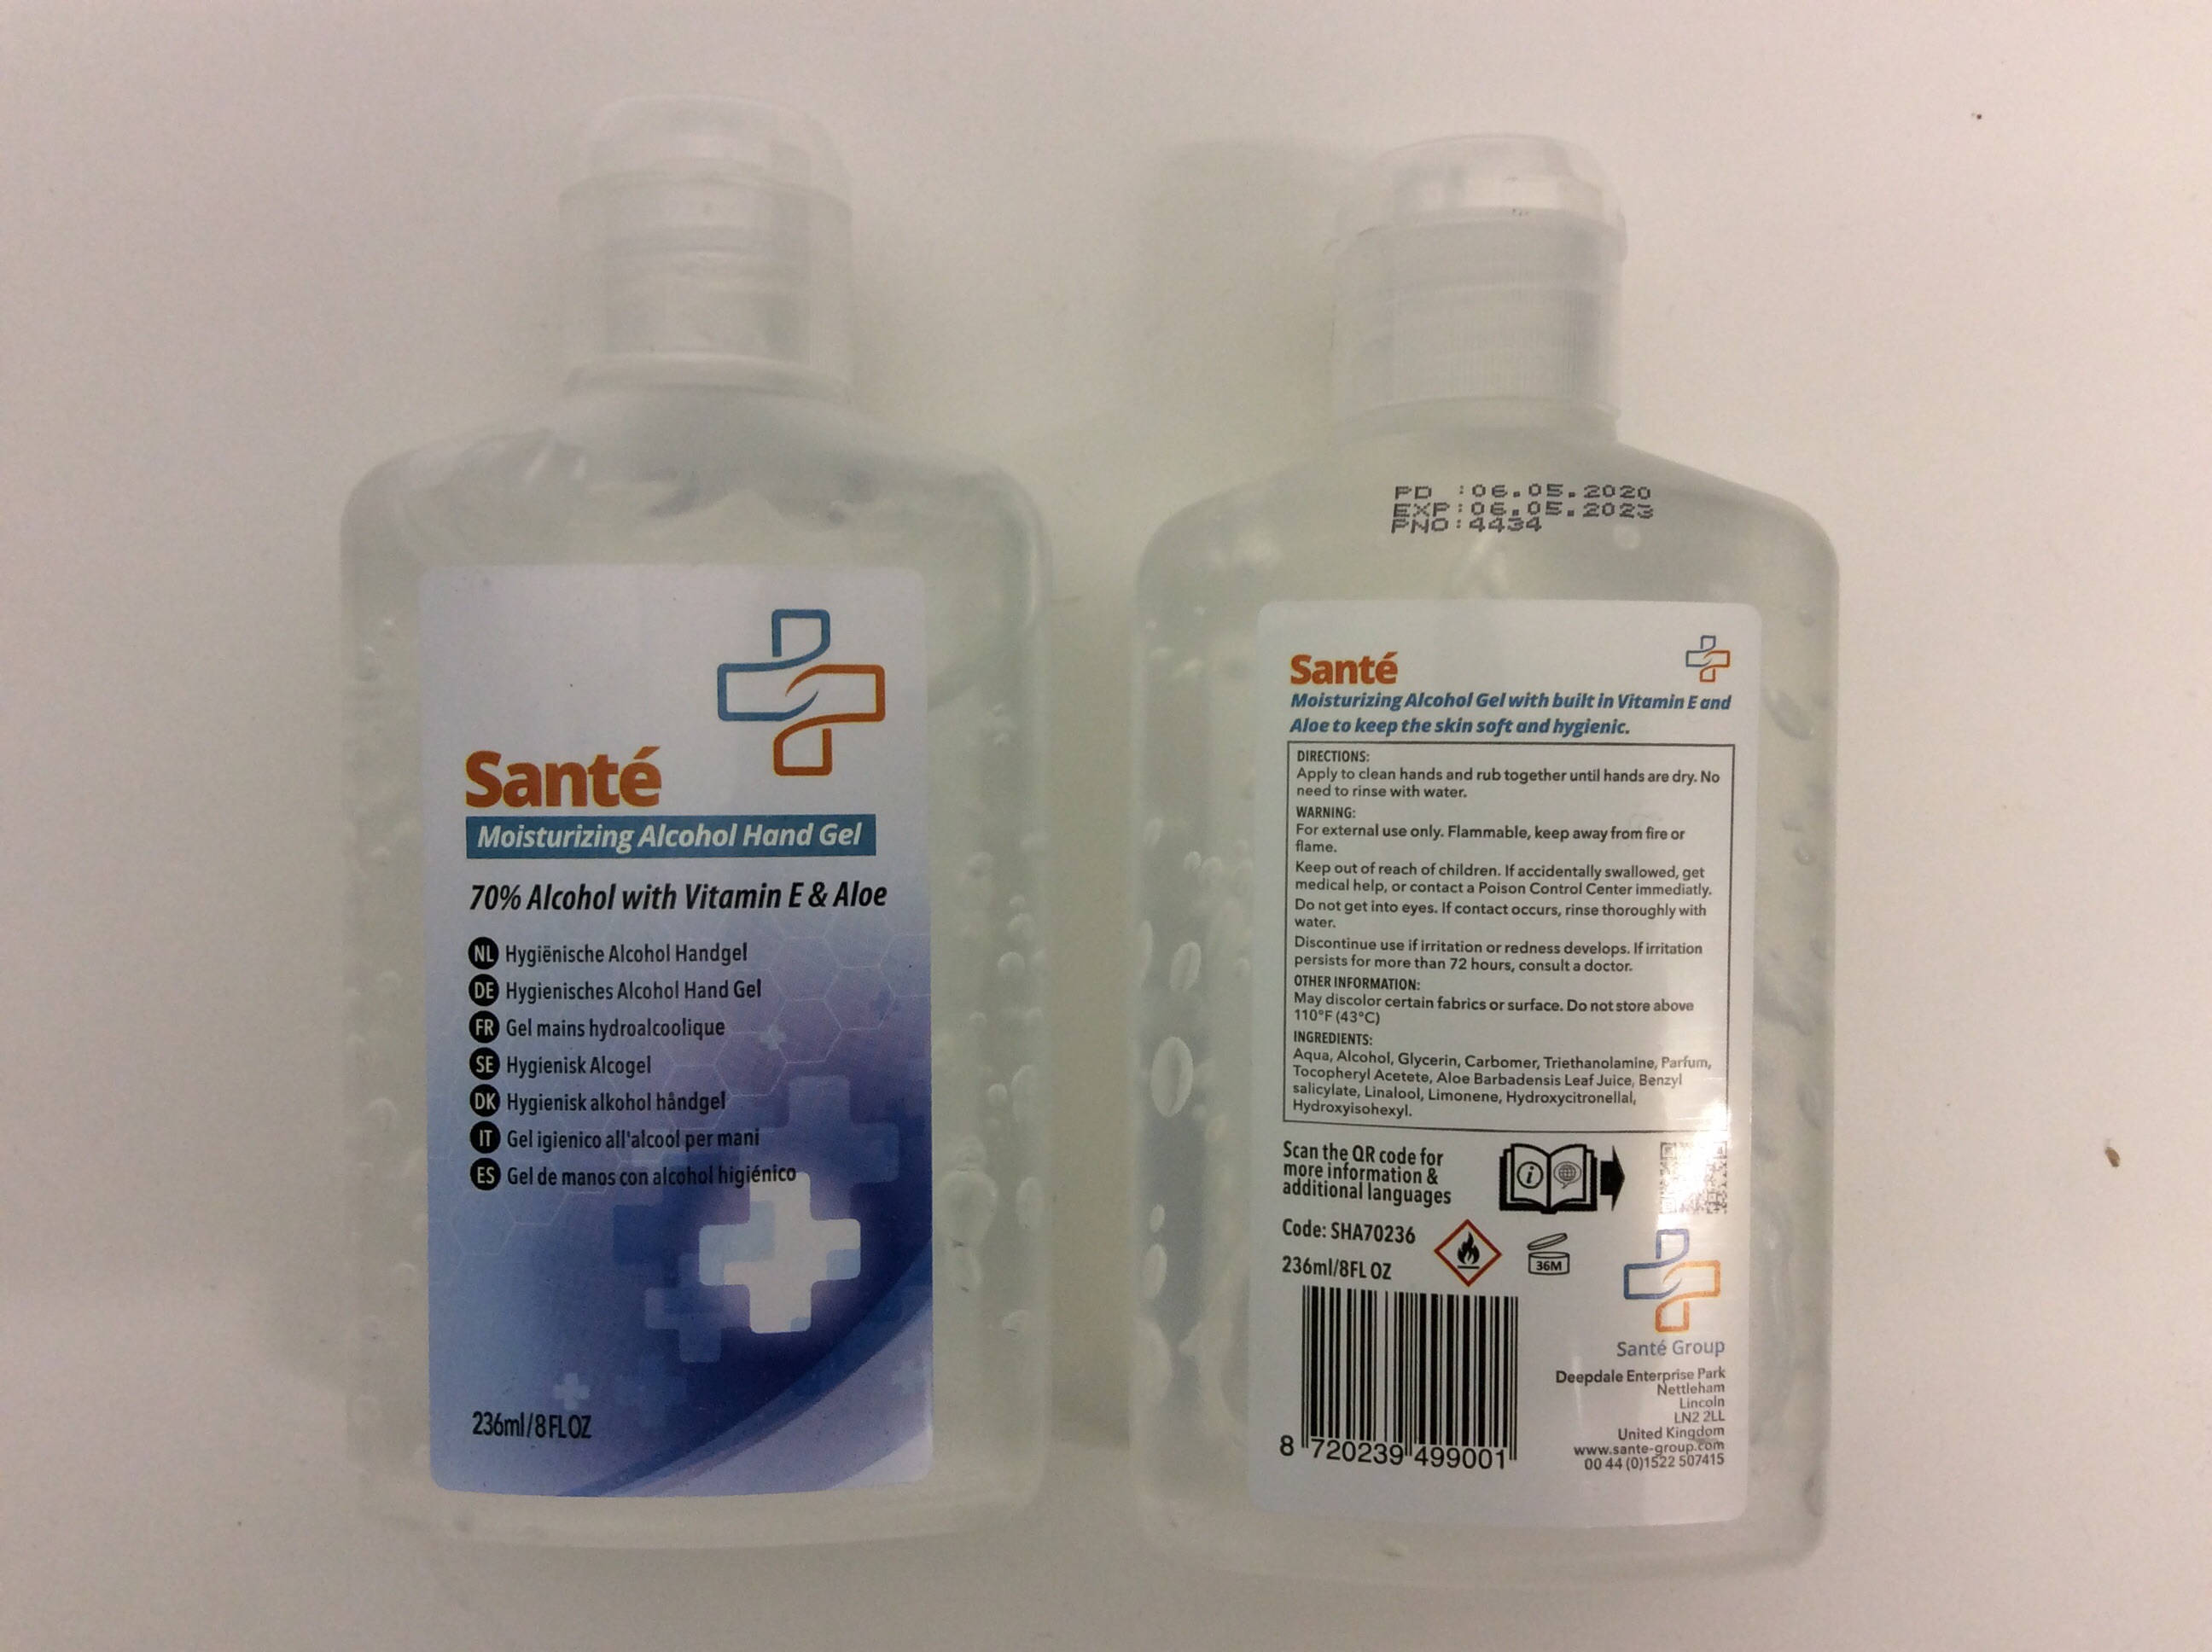 “Sante” 236ml moisturising alcohol hand gel